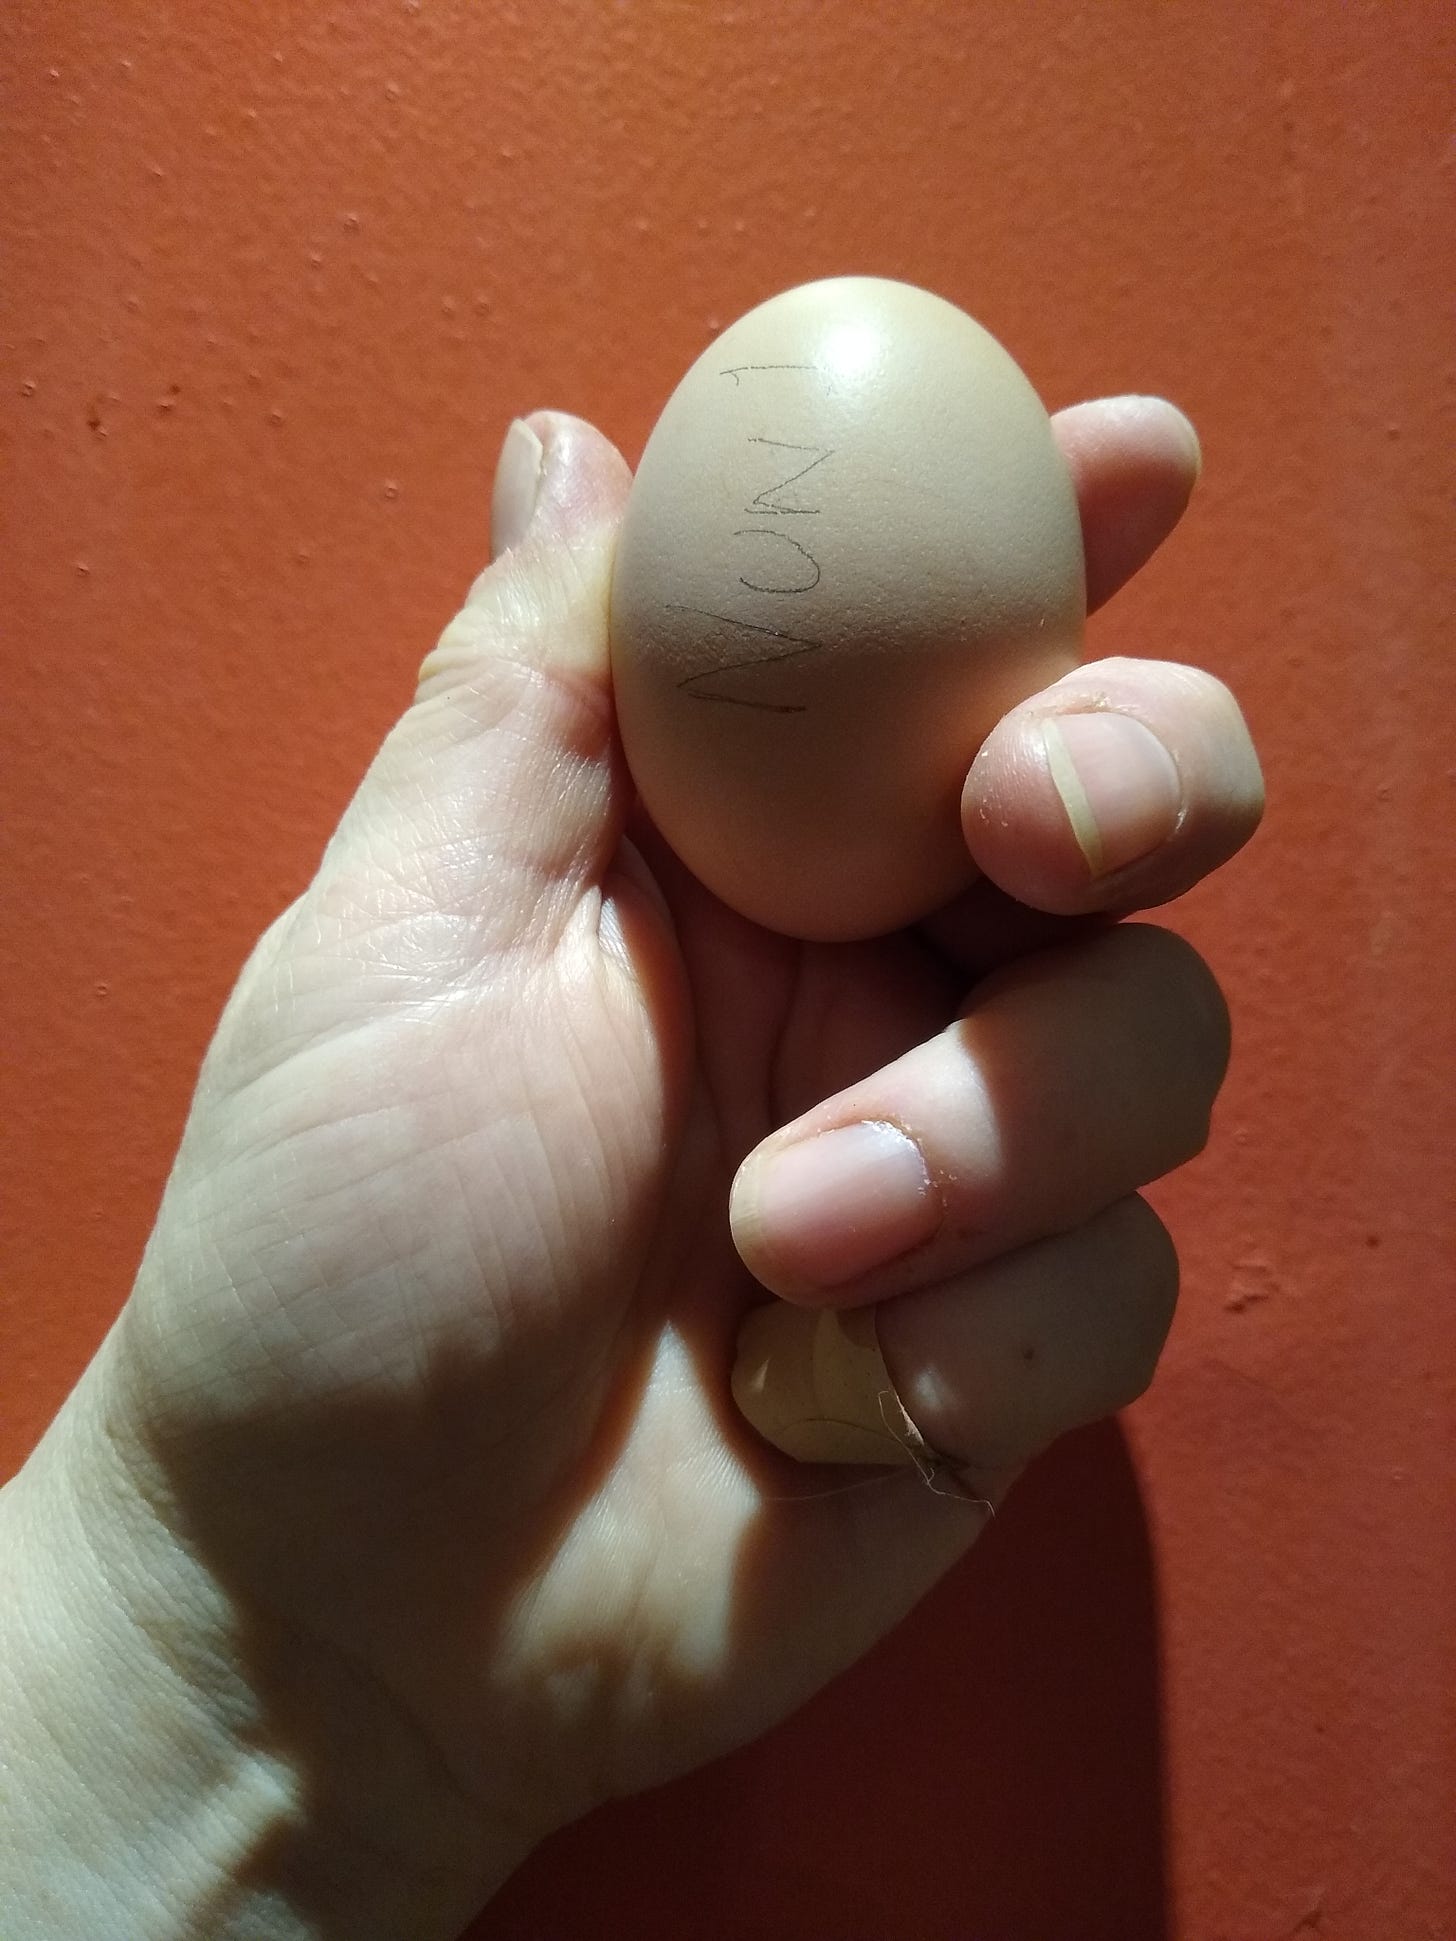 A slightly grubby hand holds aloft an egg with "Nun 1" pencilled onto it